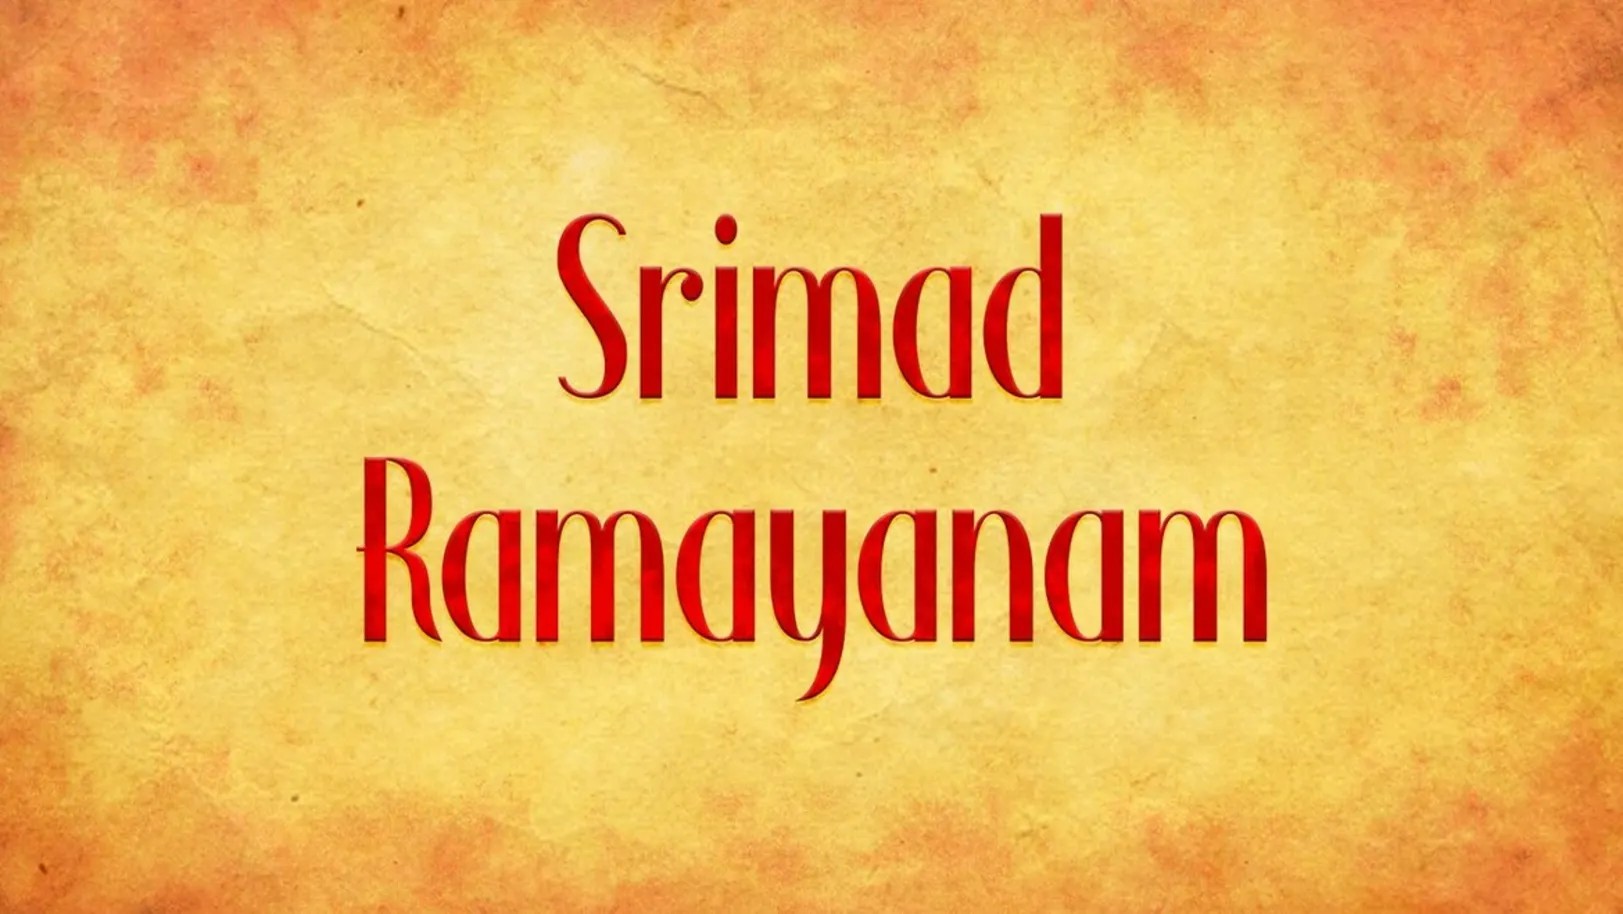 Srimad Ramayanam Streaming Now On Aastha Tamil